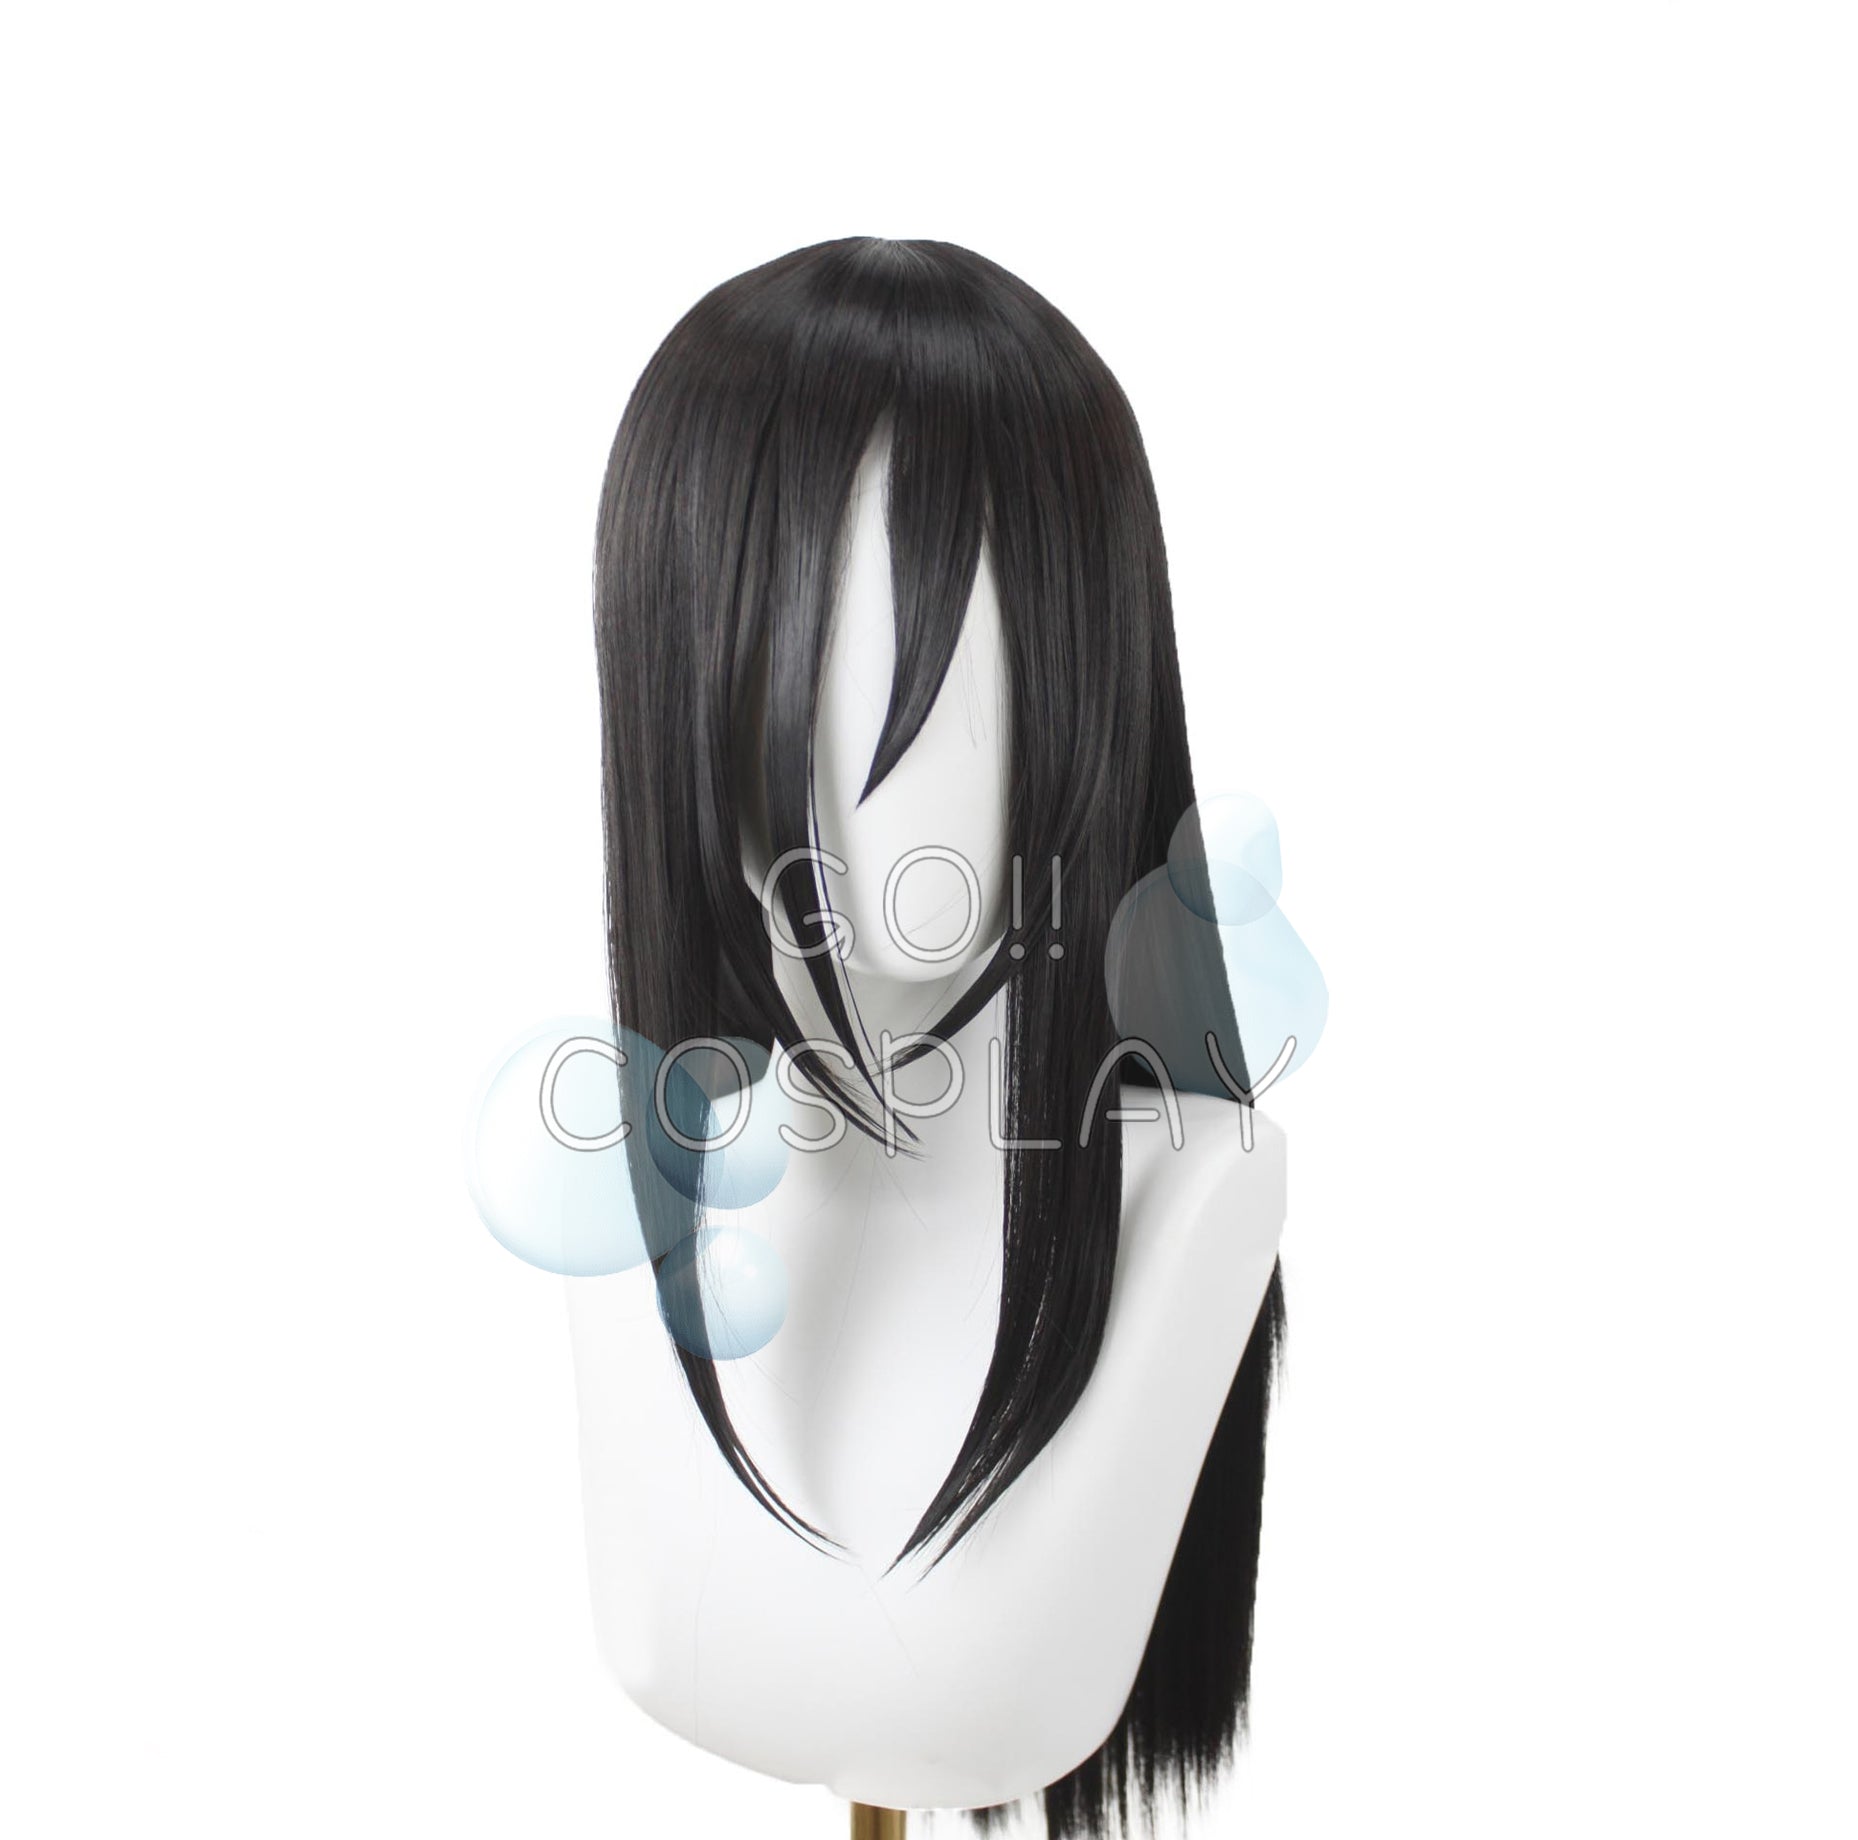 Orochimaru Cosplay Wig for Sale